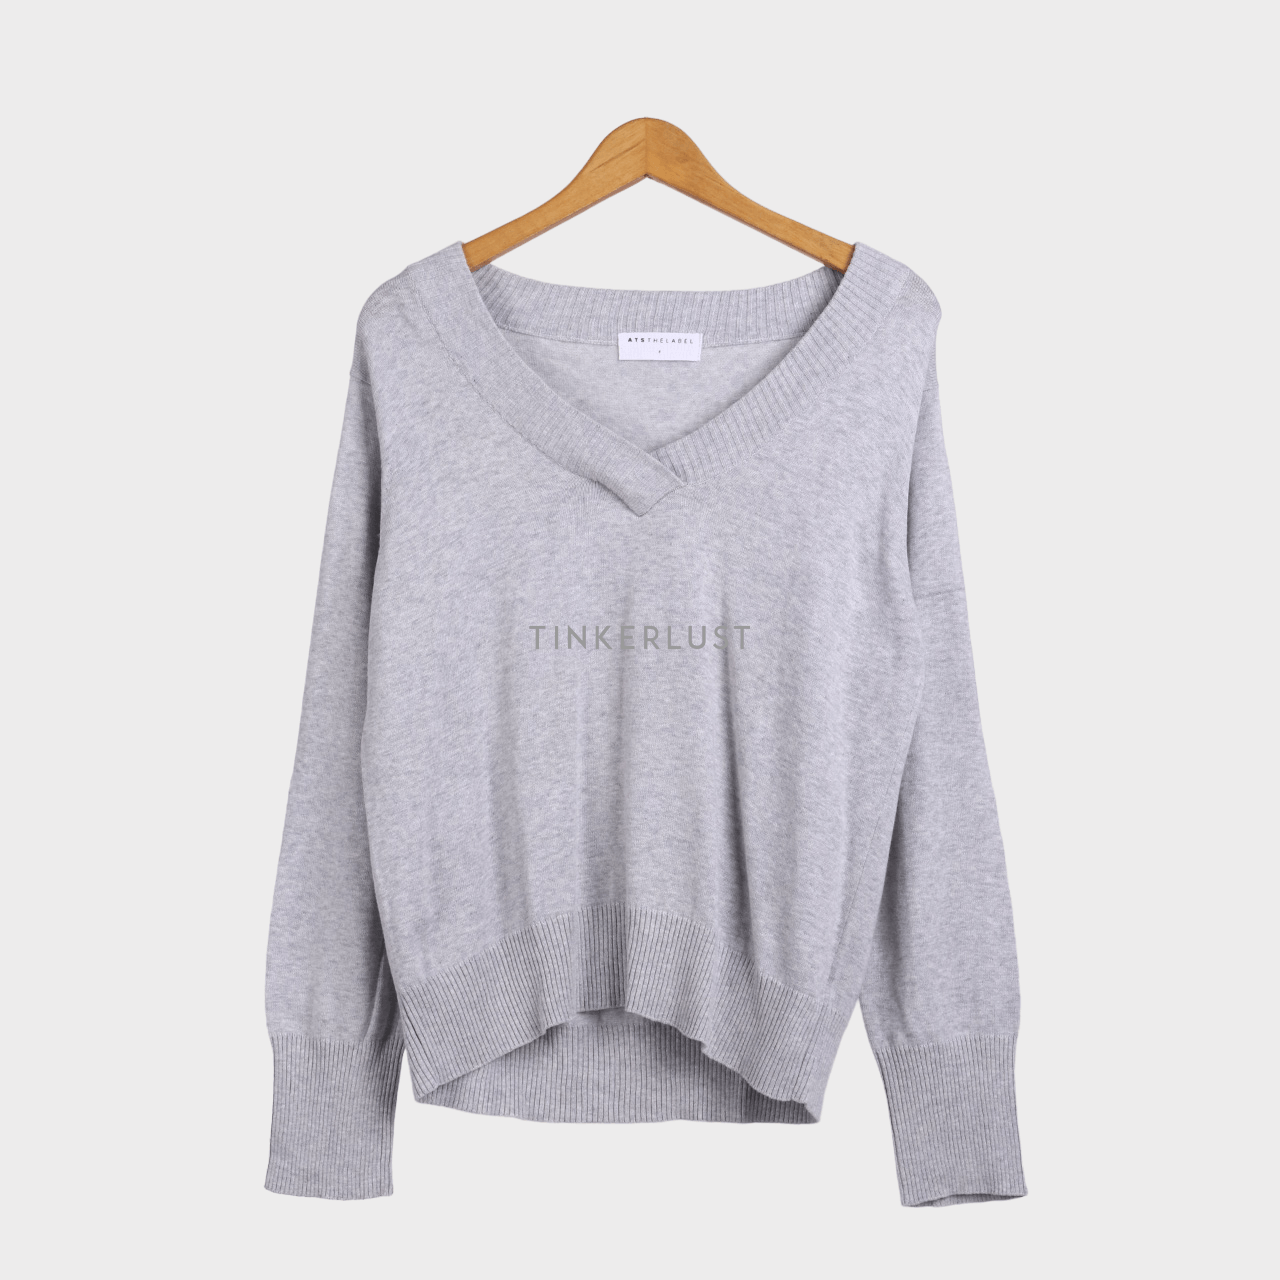 ATS The Label Light Grey Sweater